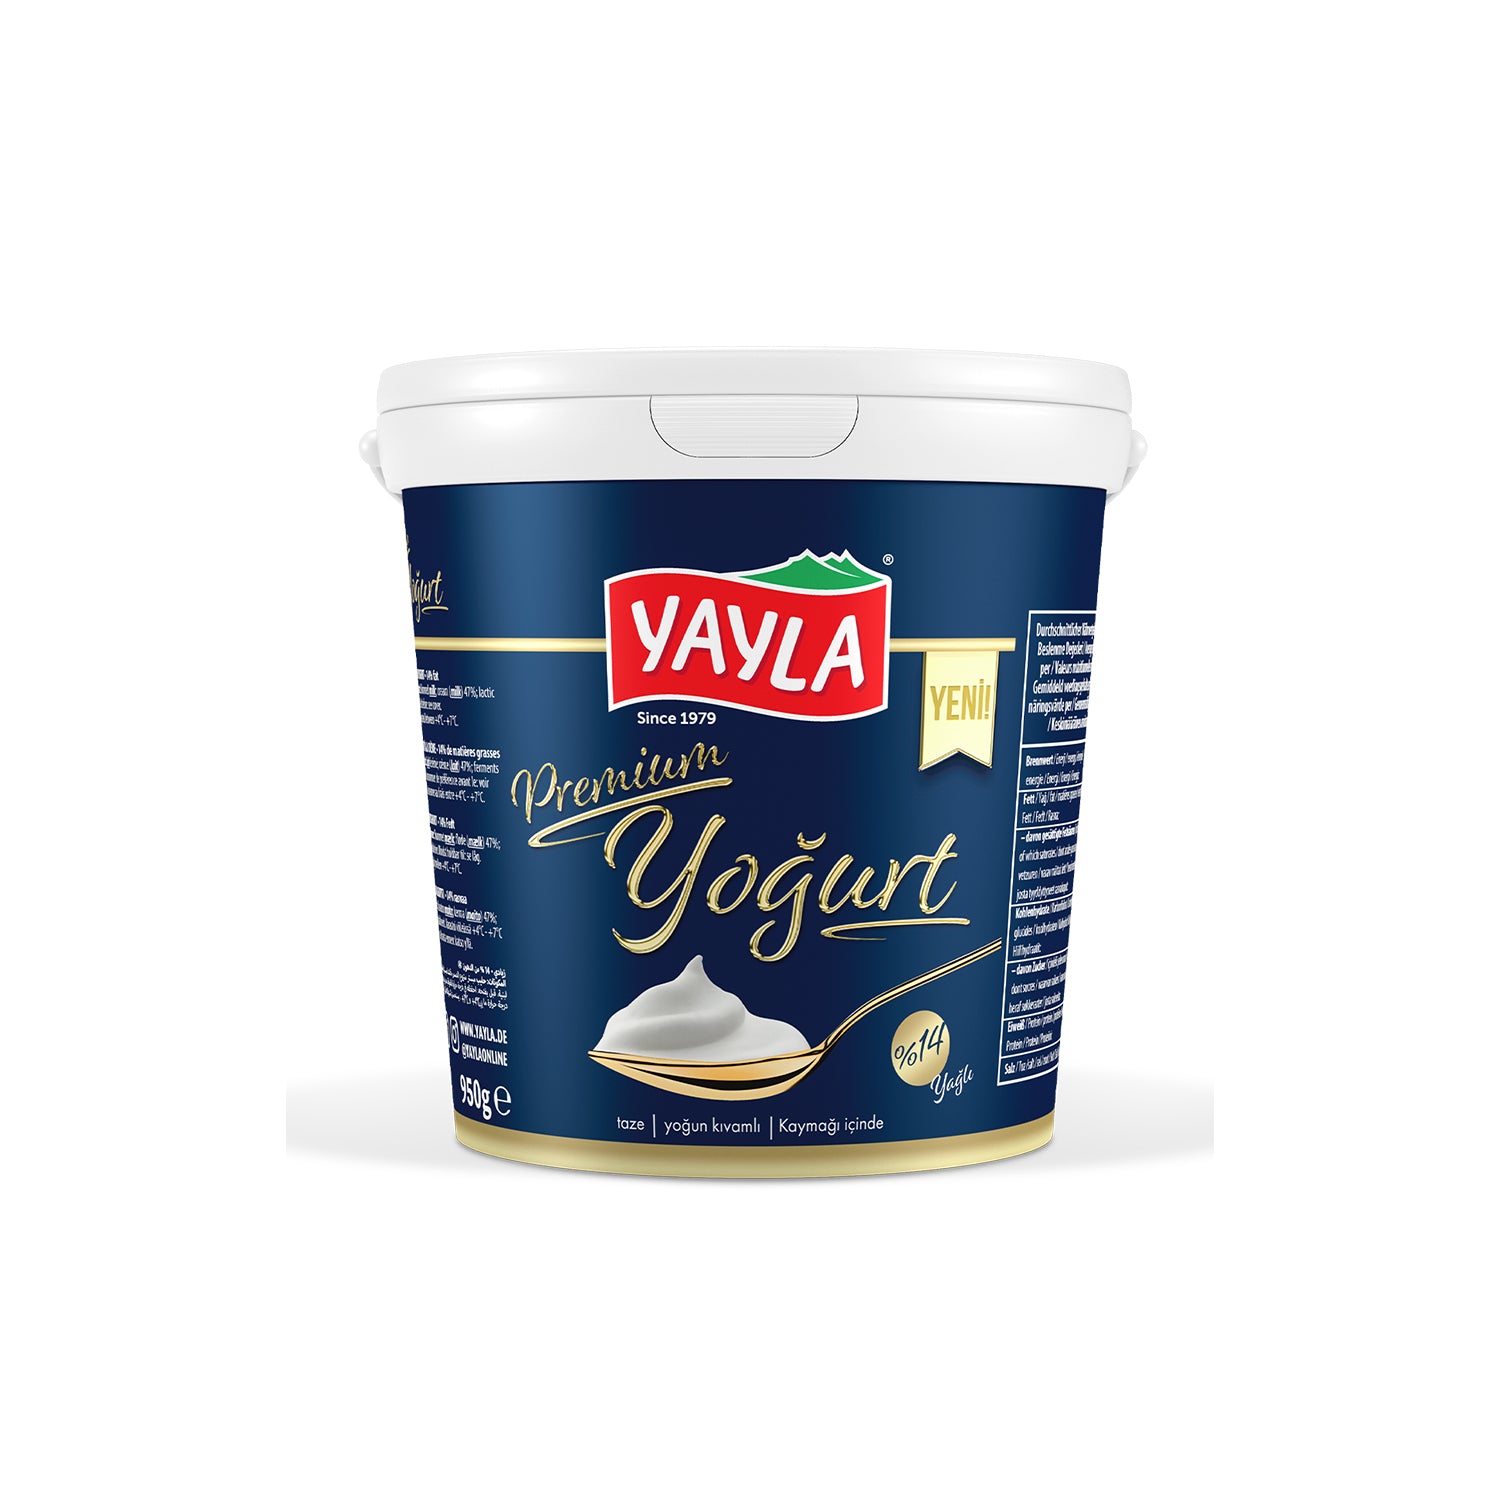 Yayla Premium Yogurt 14% 950g